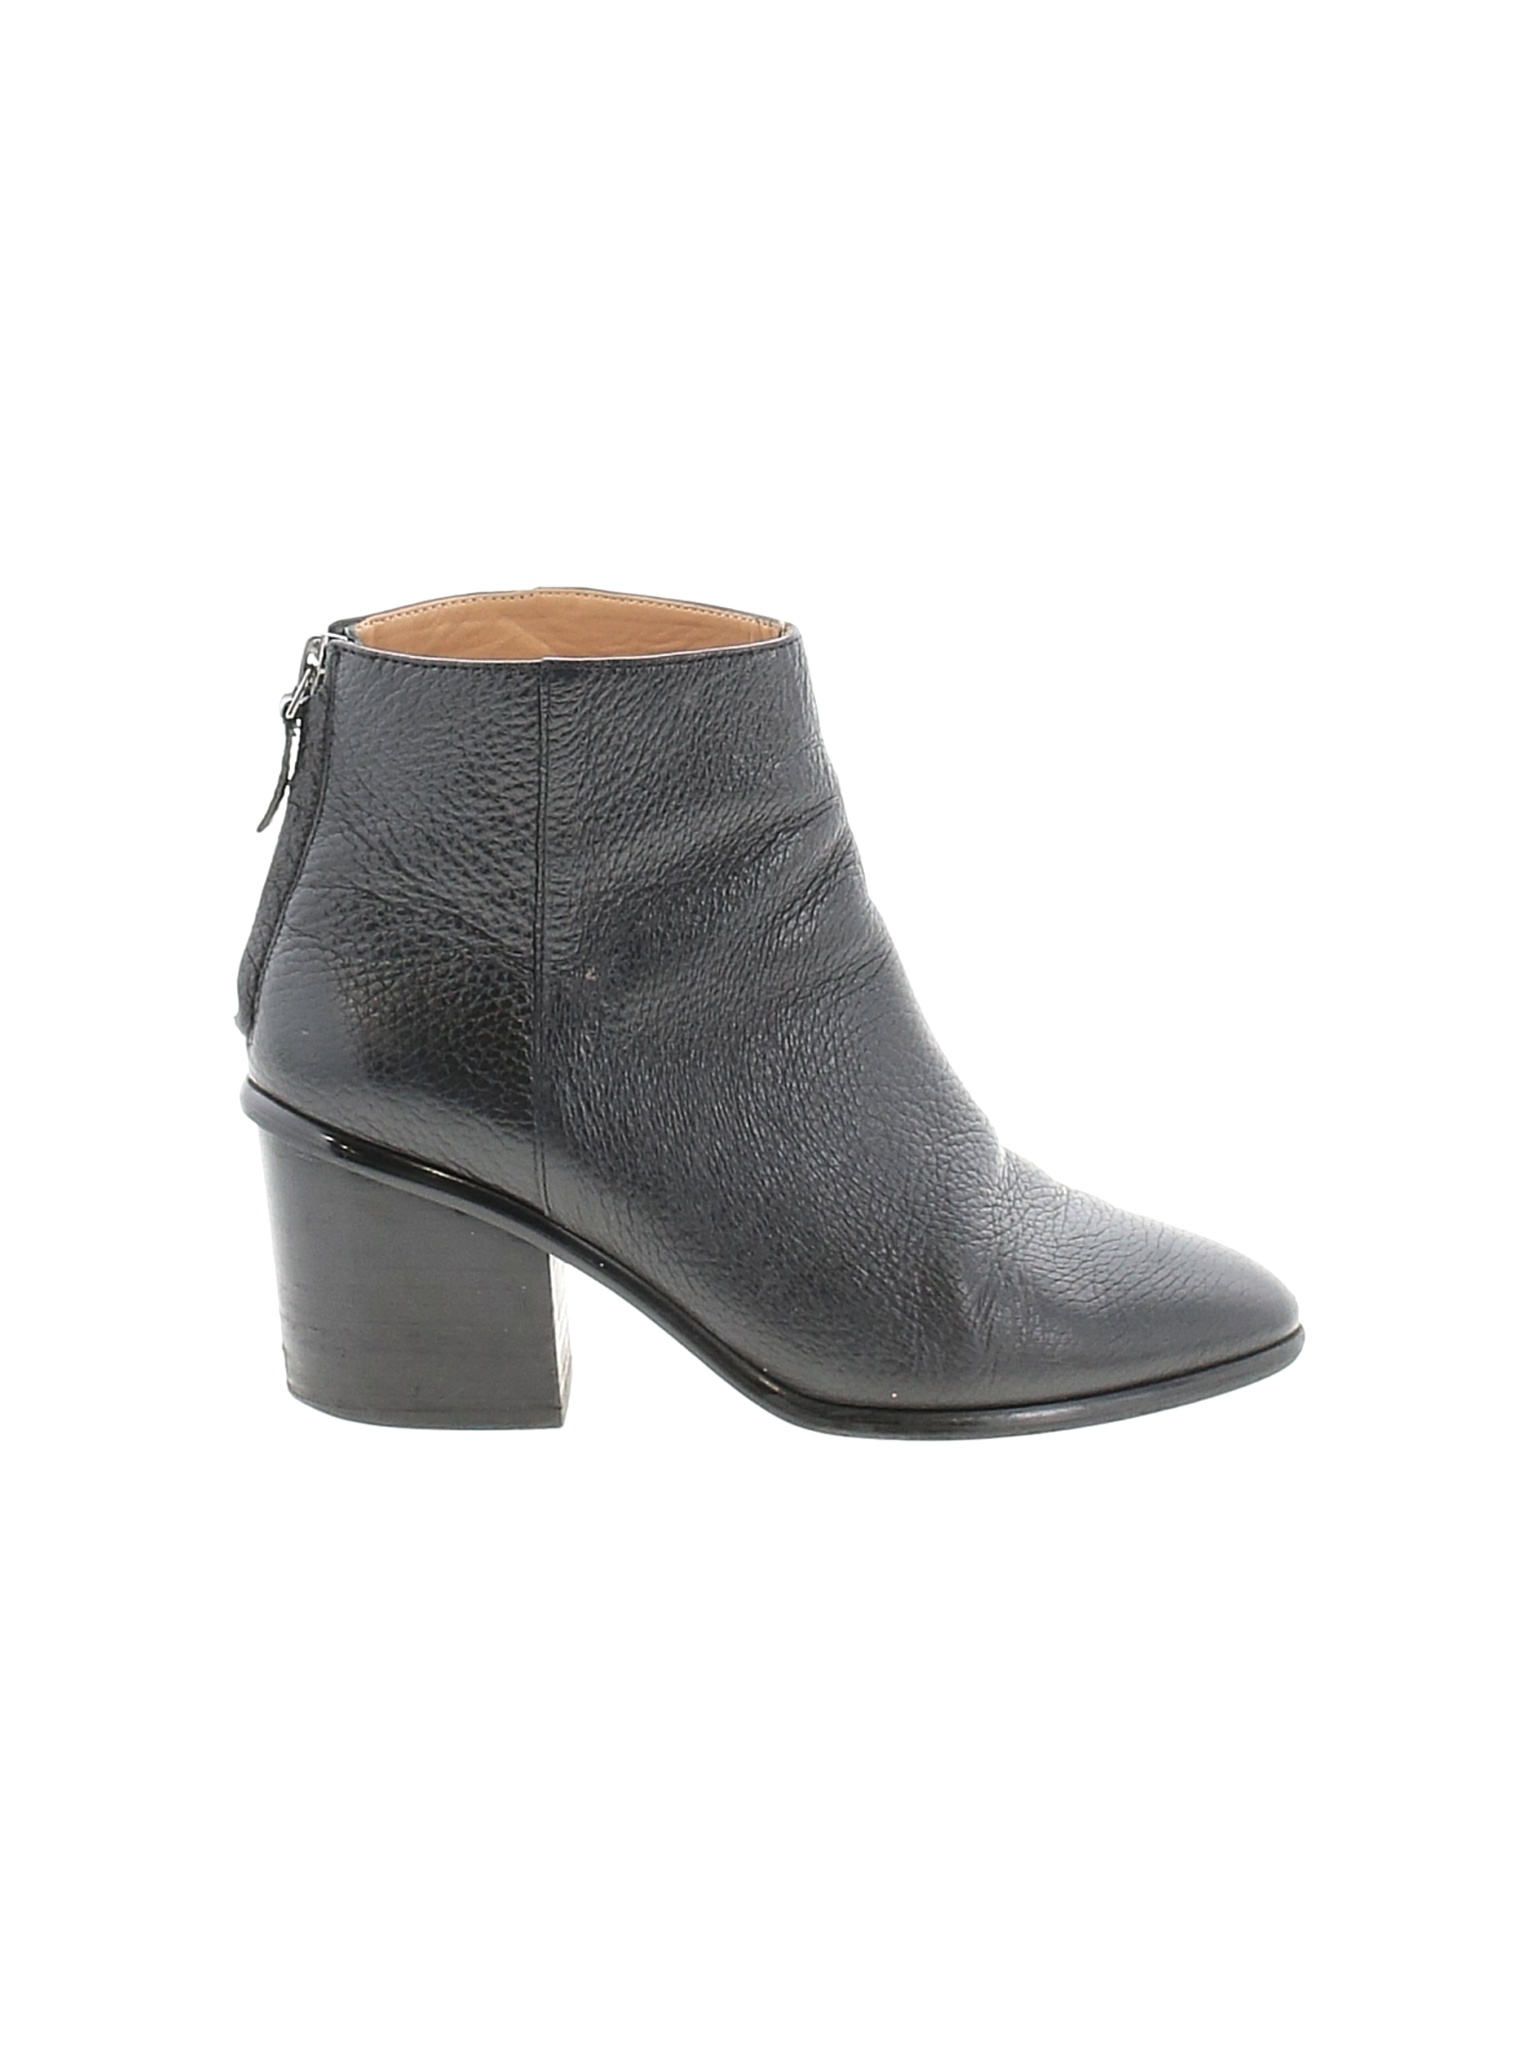 Banana Republic Women Gray Ankle Boots US 6 | eBay